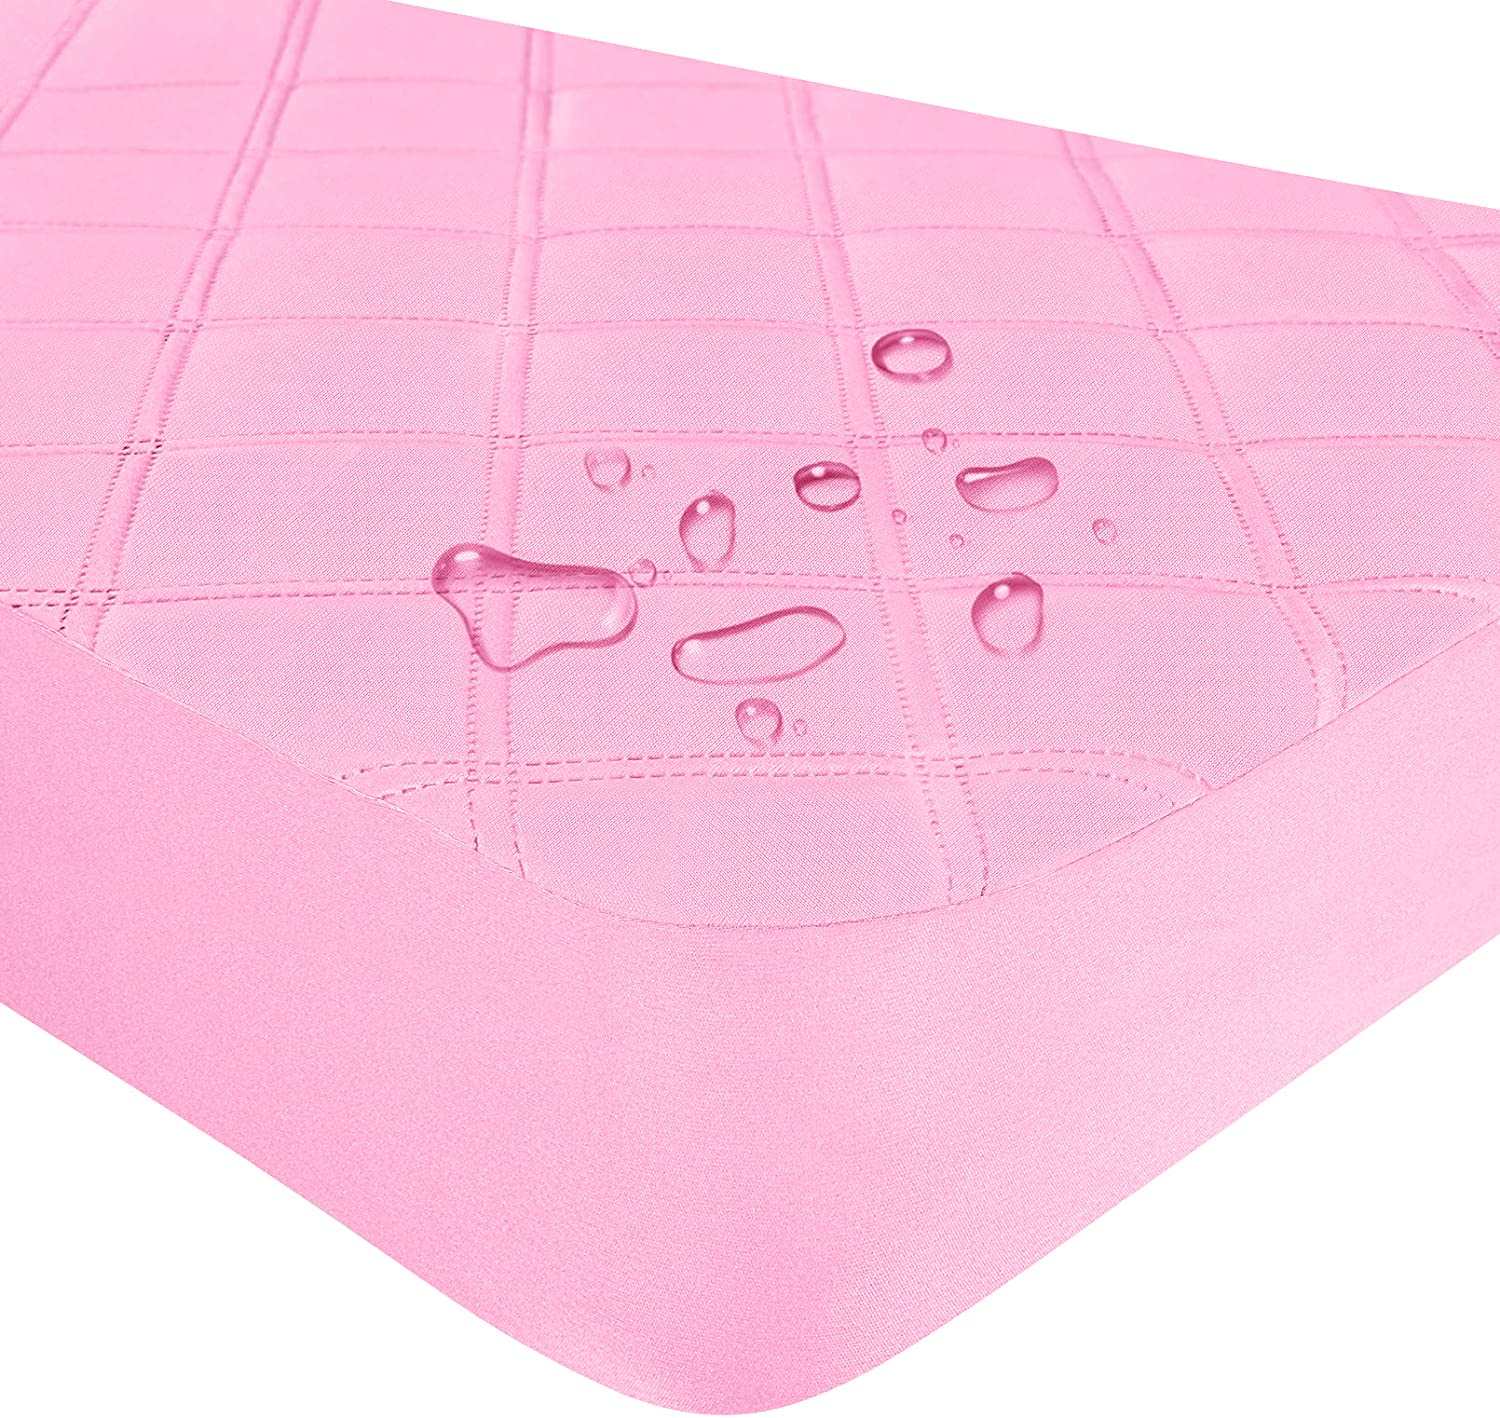 Crib Waterproof Mattress Pad